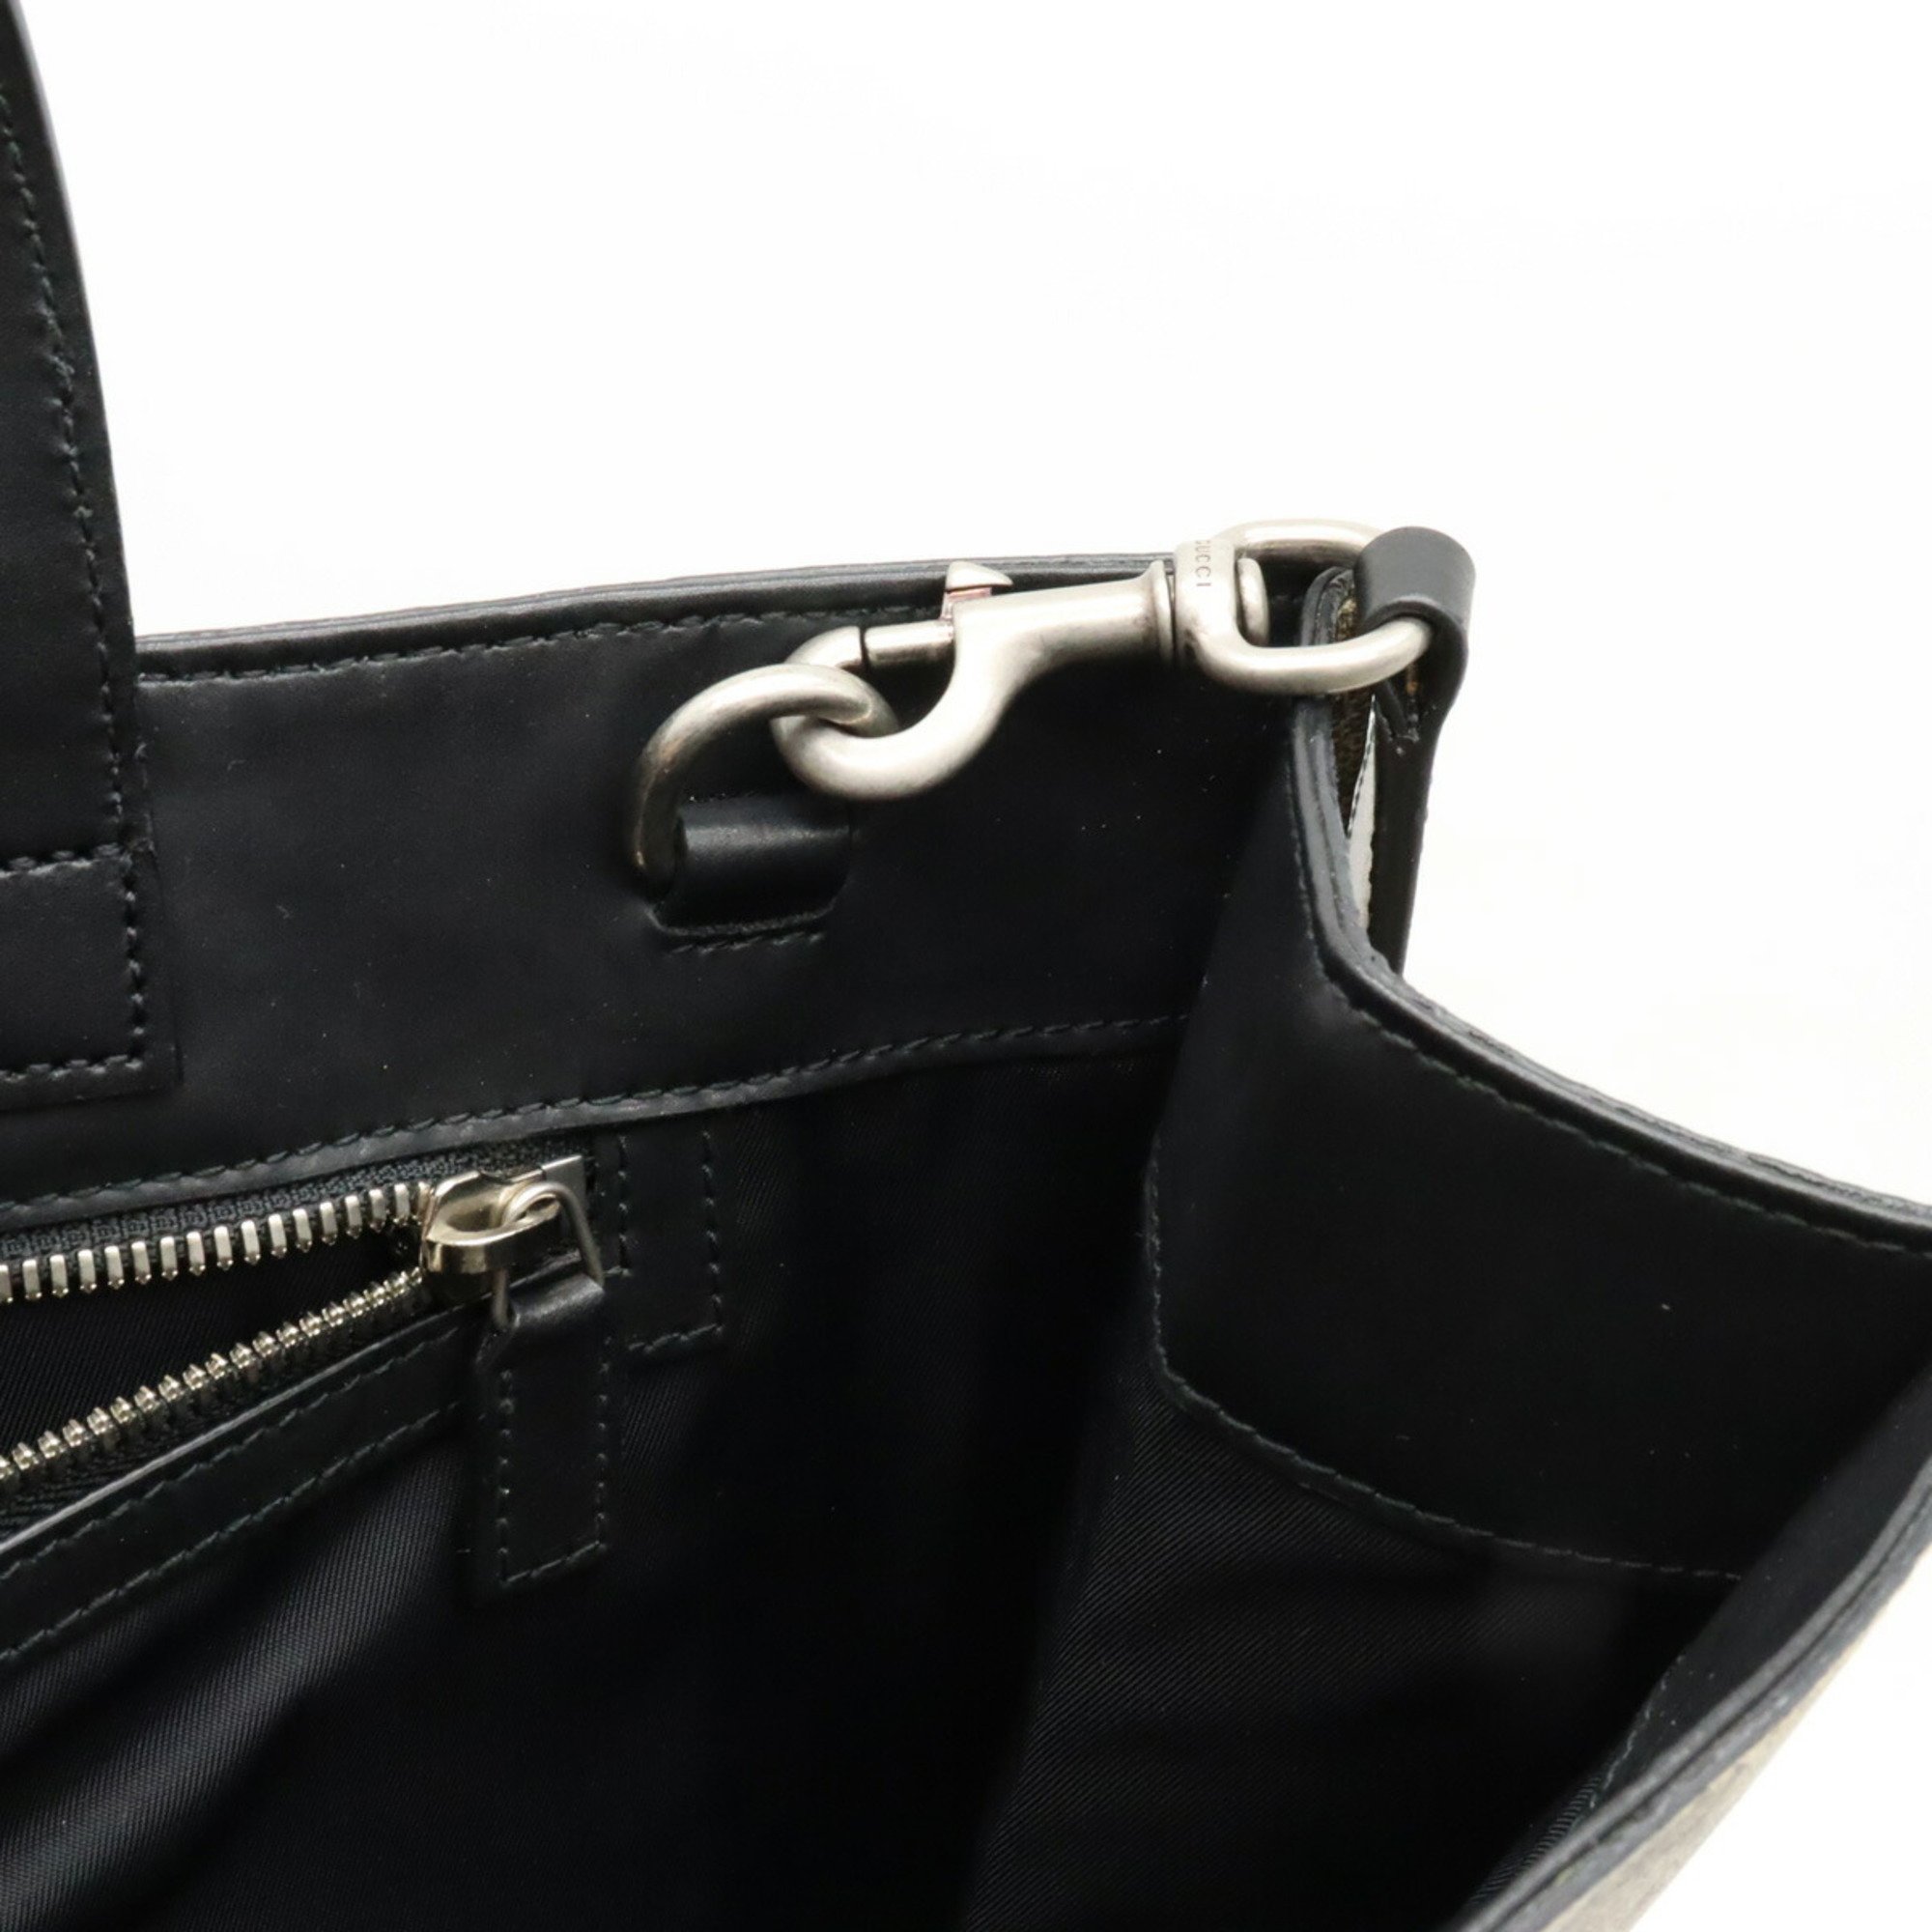 GUCCI Soft GG Supreme Tote Bag Shoulder PVC Leather Khaki Beige Black 456217